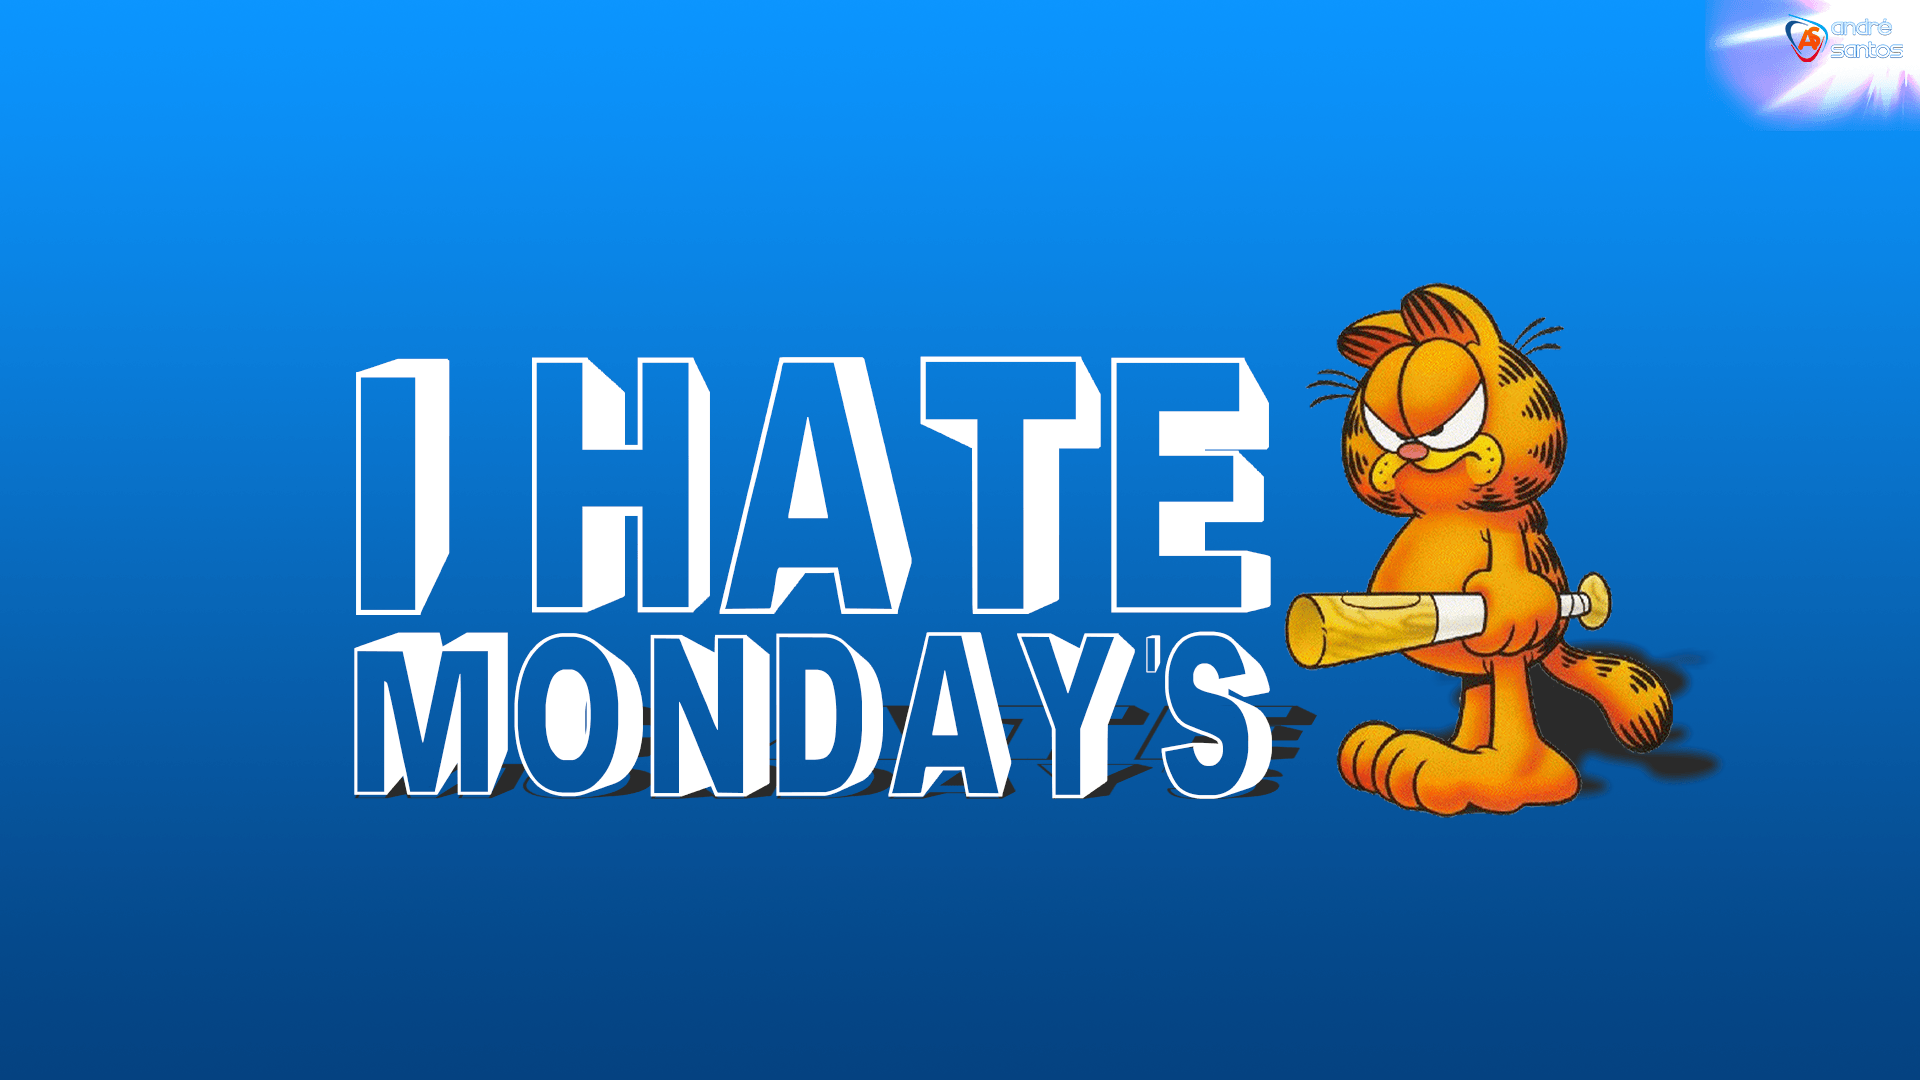 I Hate Mondays Wallpaper, 44 High Quality I Hate Mondays